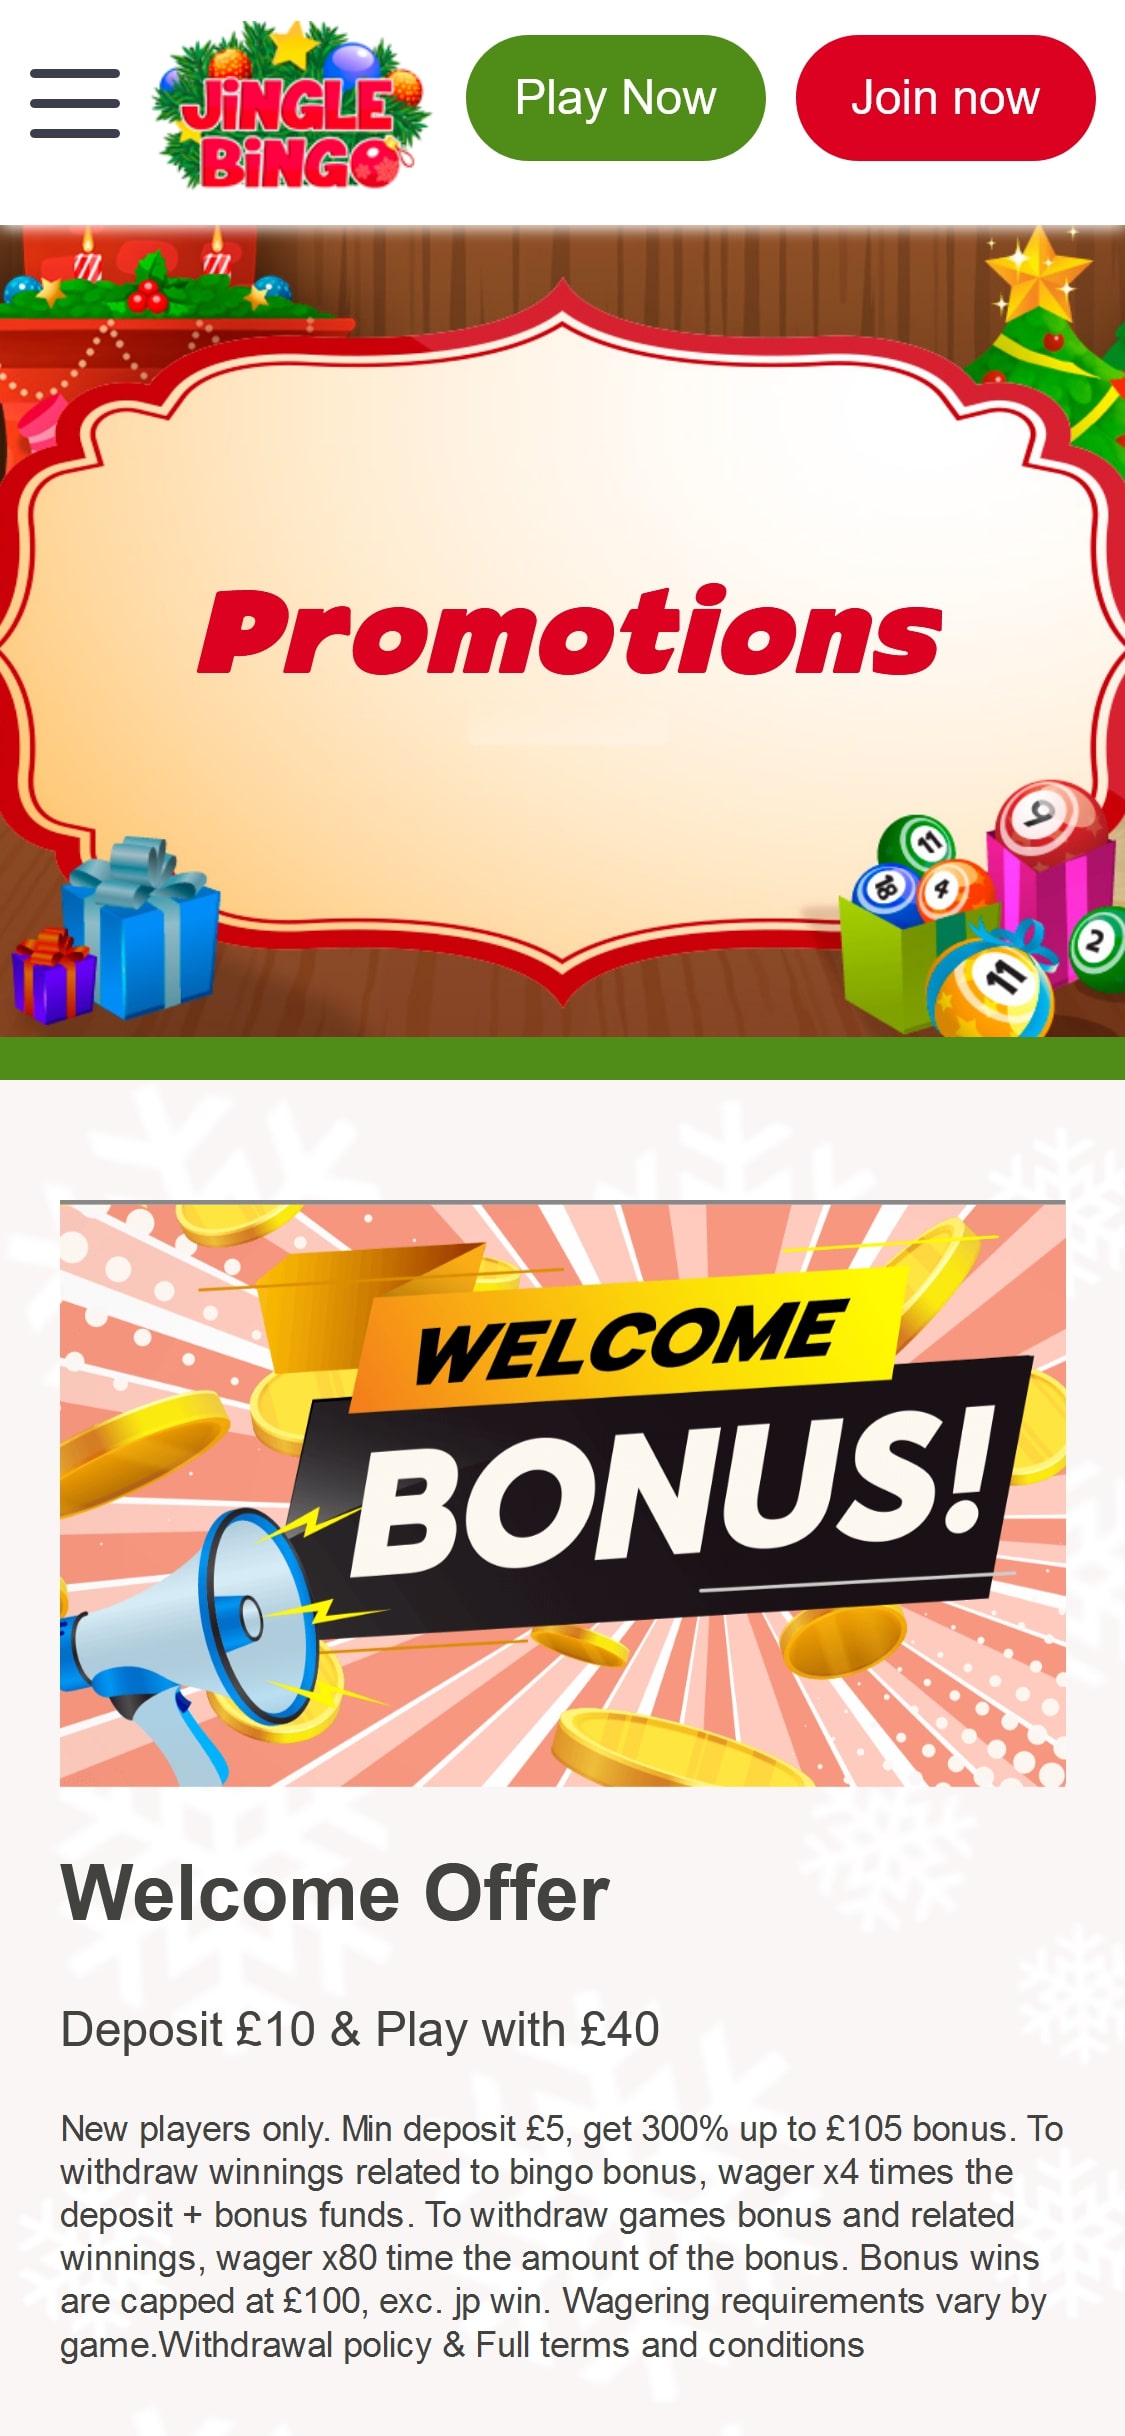 Jingle Bingo Casino Mobile No Deposit Bonus Review